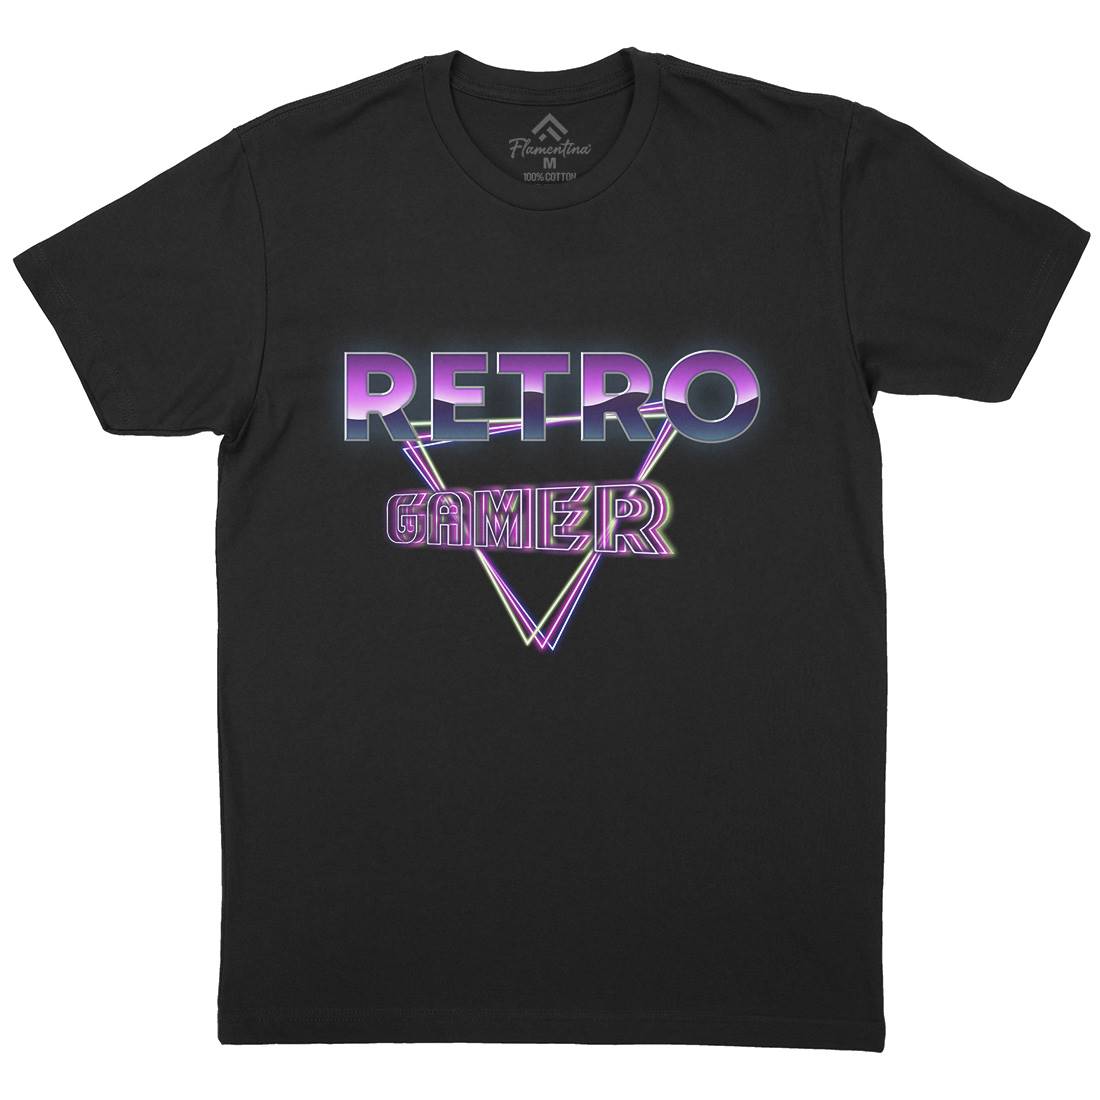 Retro Gamer Mens Organic Crew Neck T-Shirt Geek B996